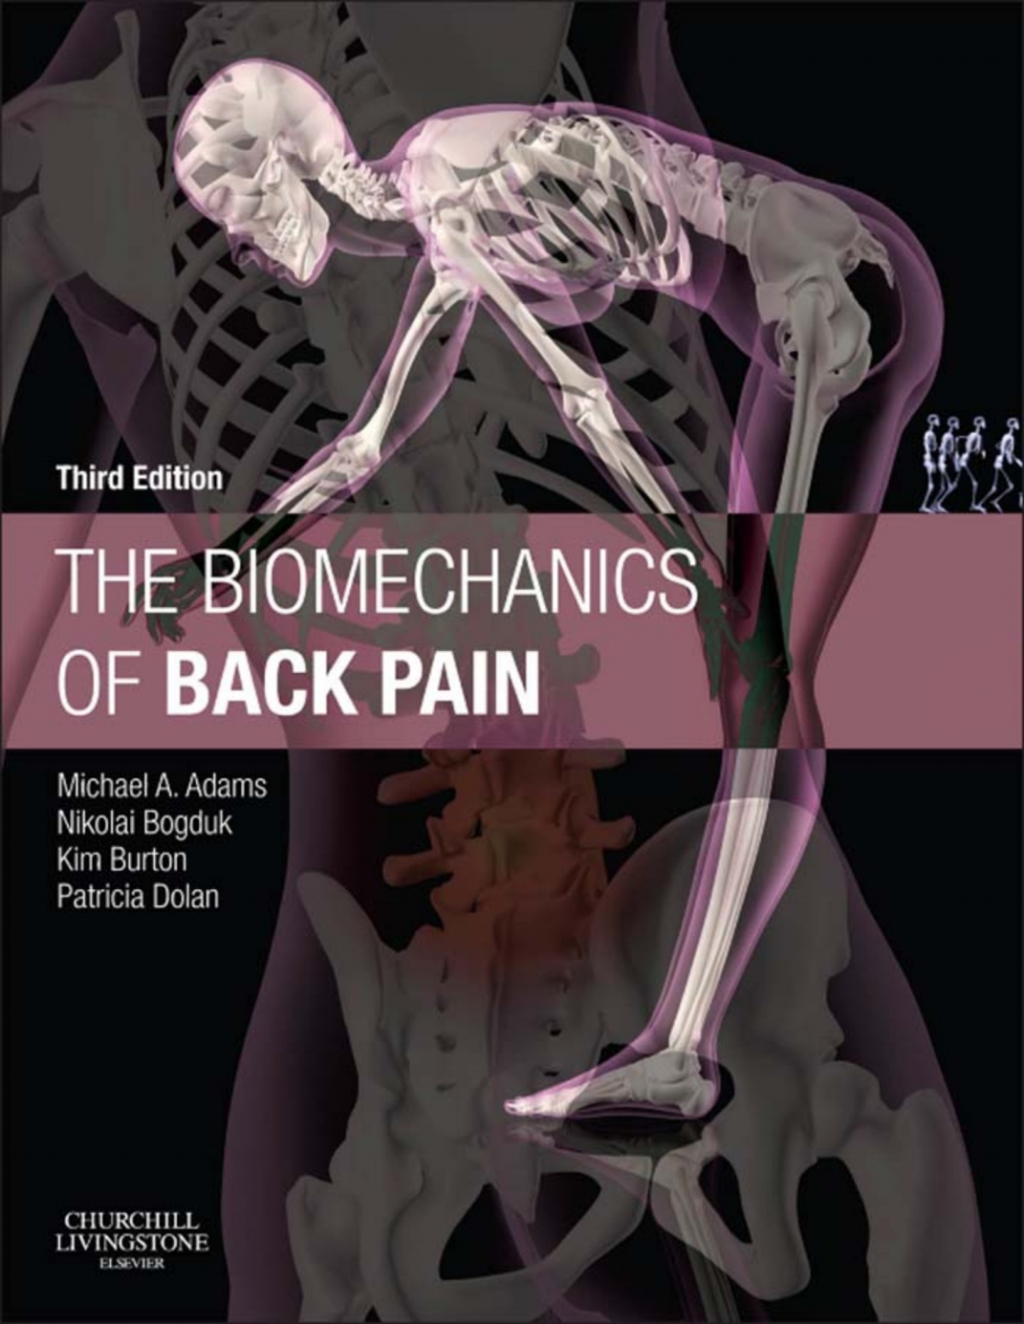 The Biomechanics of Back Pain - 3rd Edition (eBook)